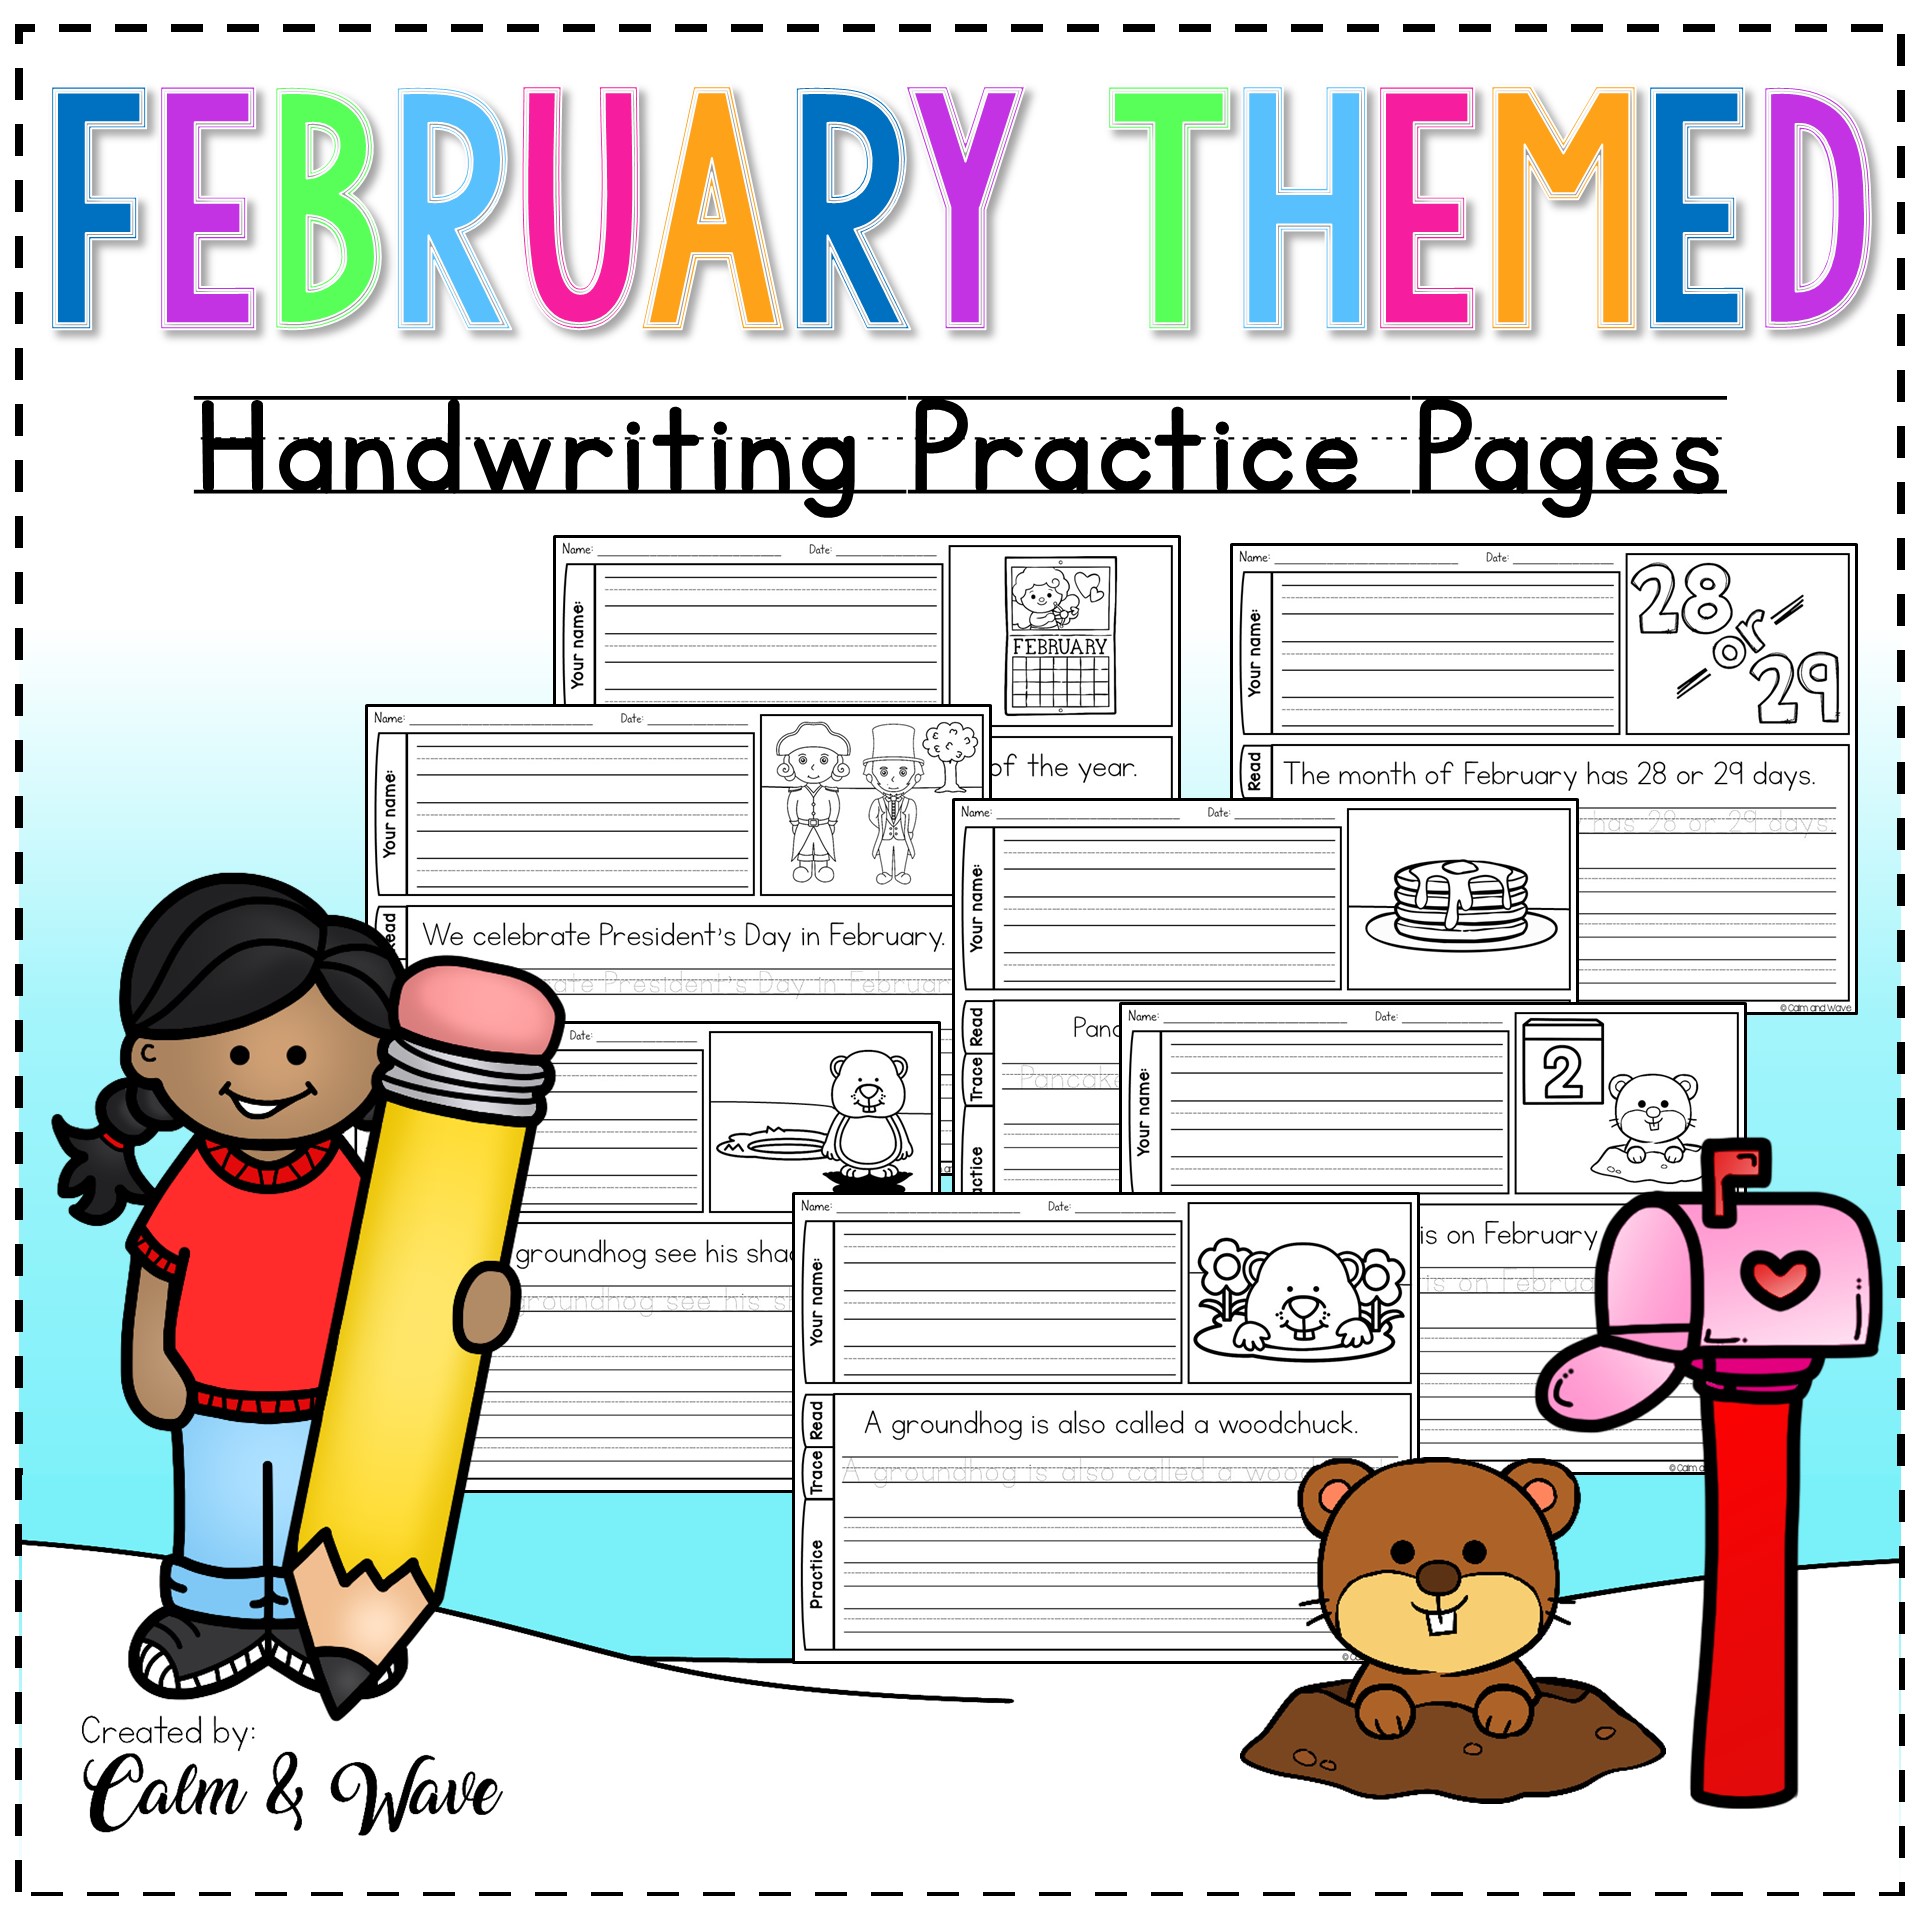 February Themed Handwriting Practice Worksheets | Copywork